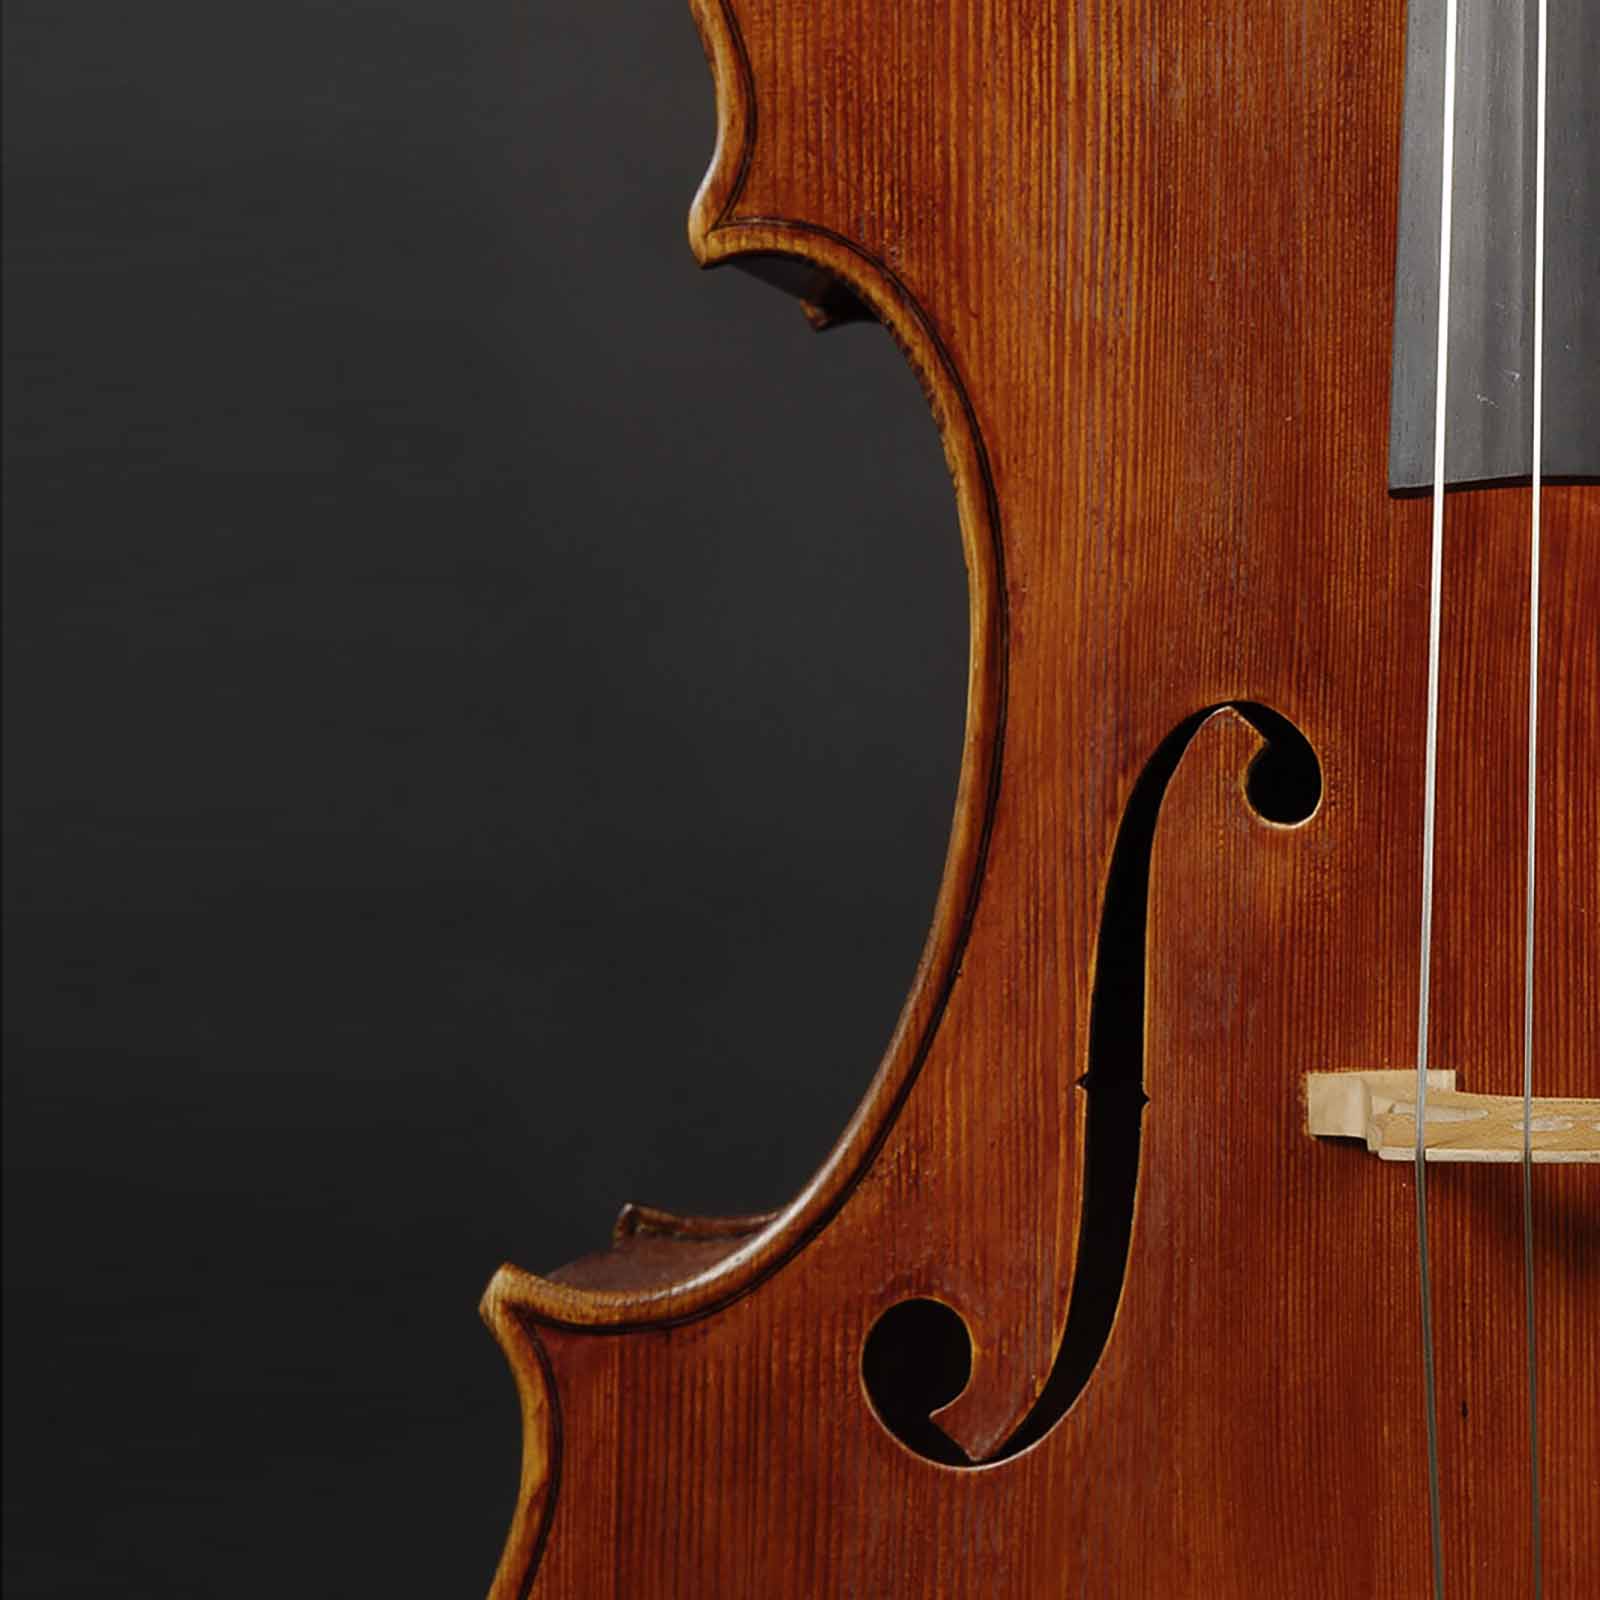 Antonio Stradivari Cremona 1730 “Feuermann“ “Maremmano“ - Image 5